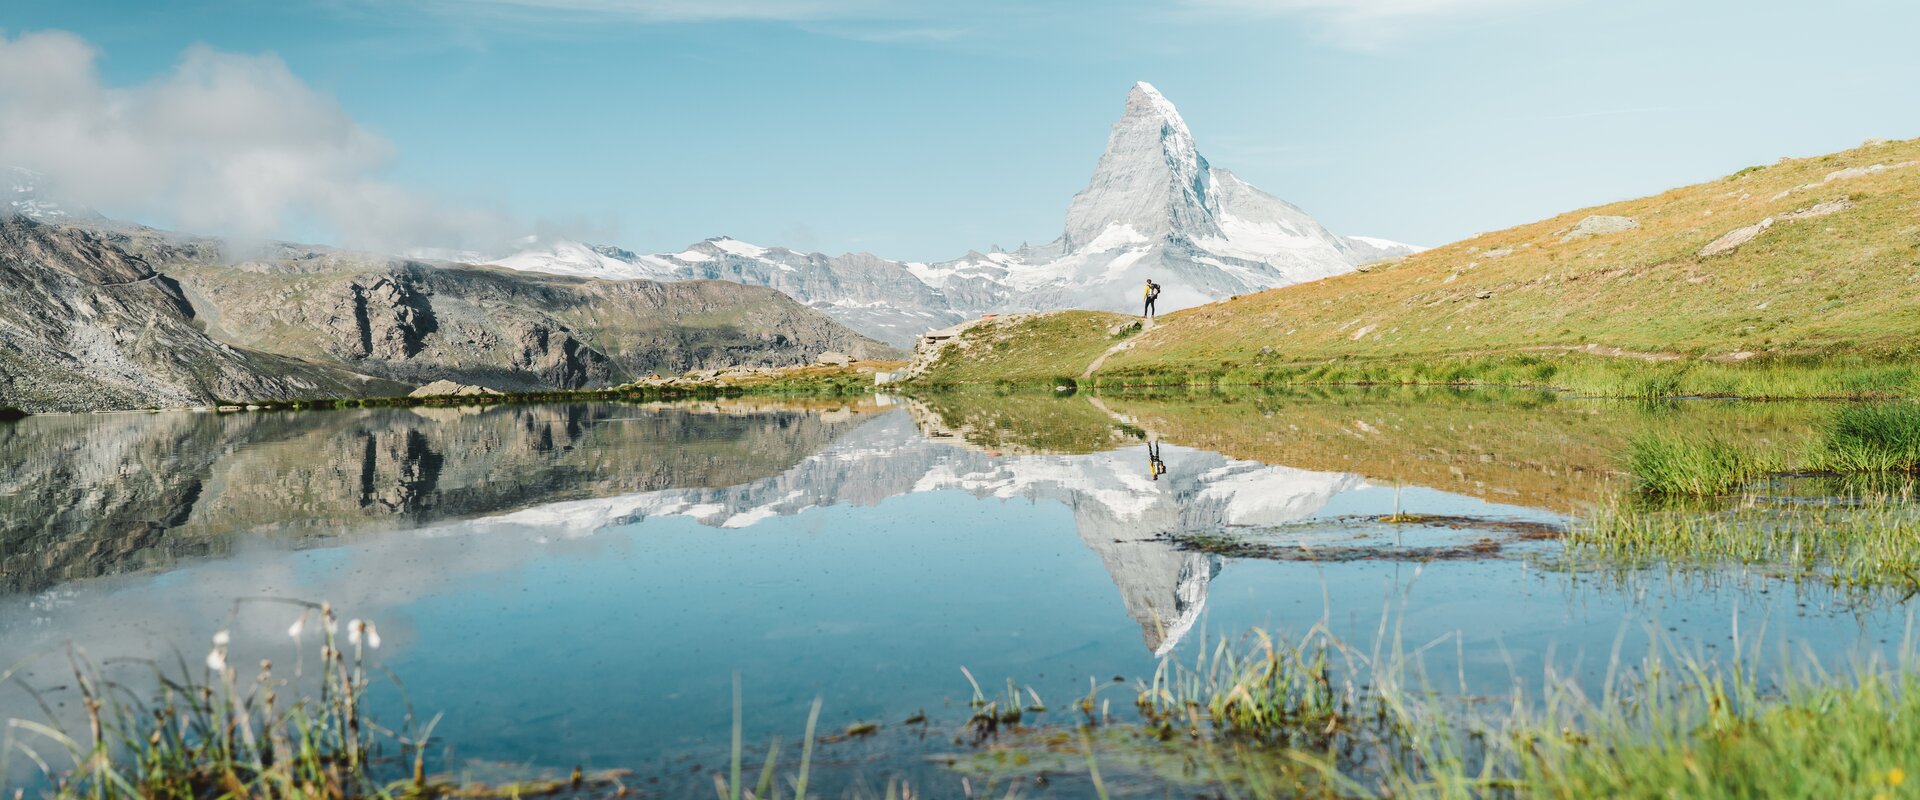 Hiking at Lake Stellisee near the reflecting Matterhorn | © Marco Schnyder